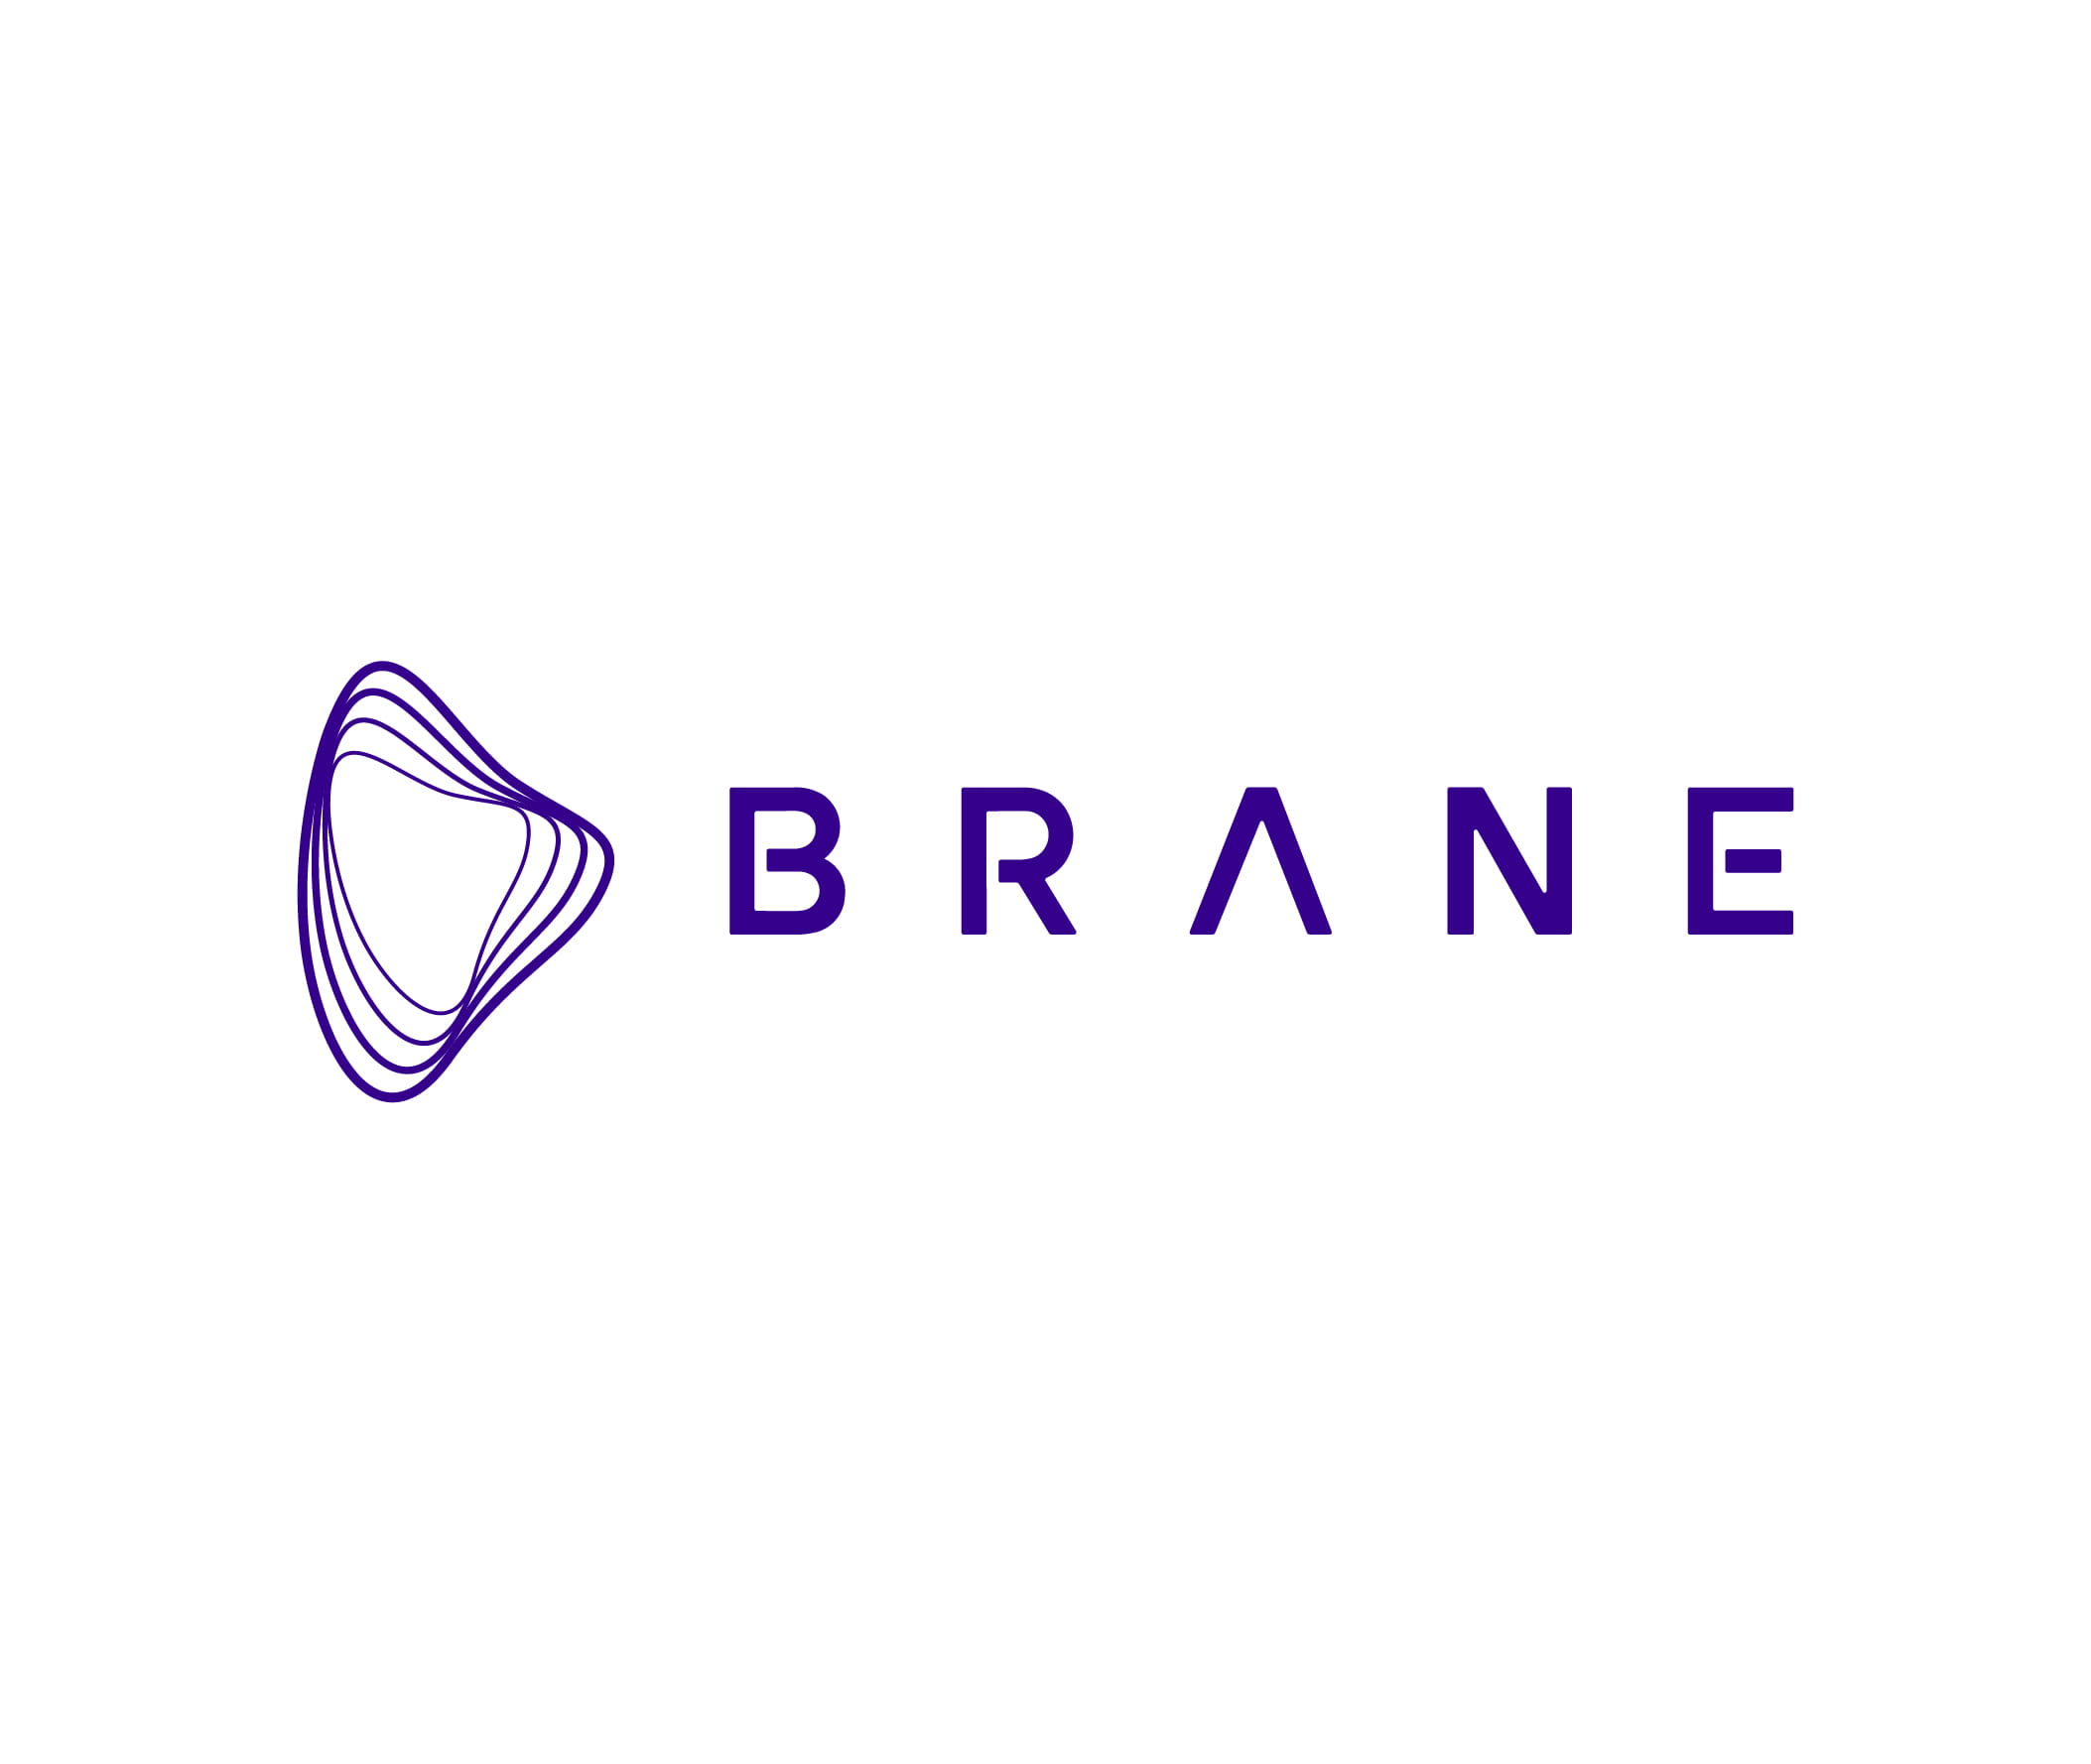 Brane logo